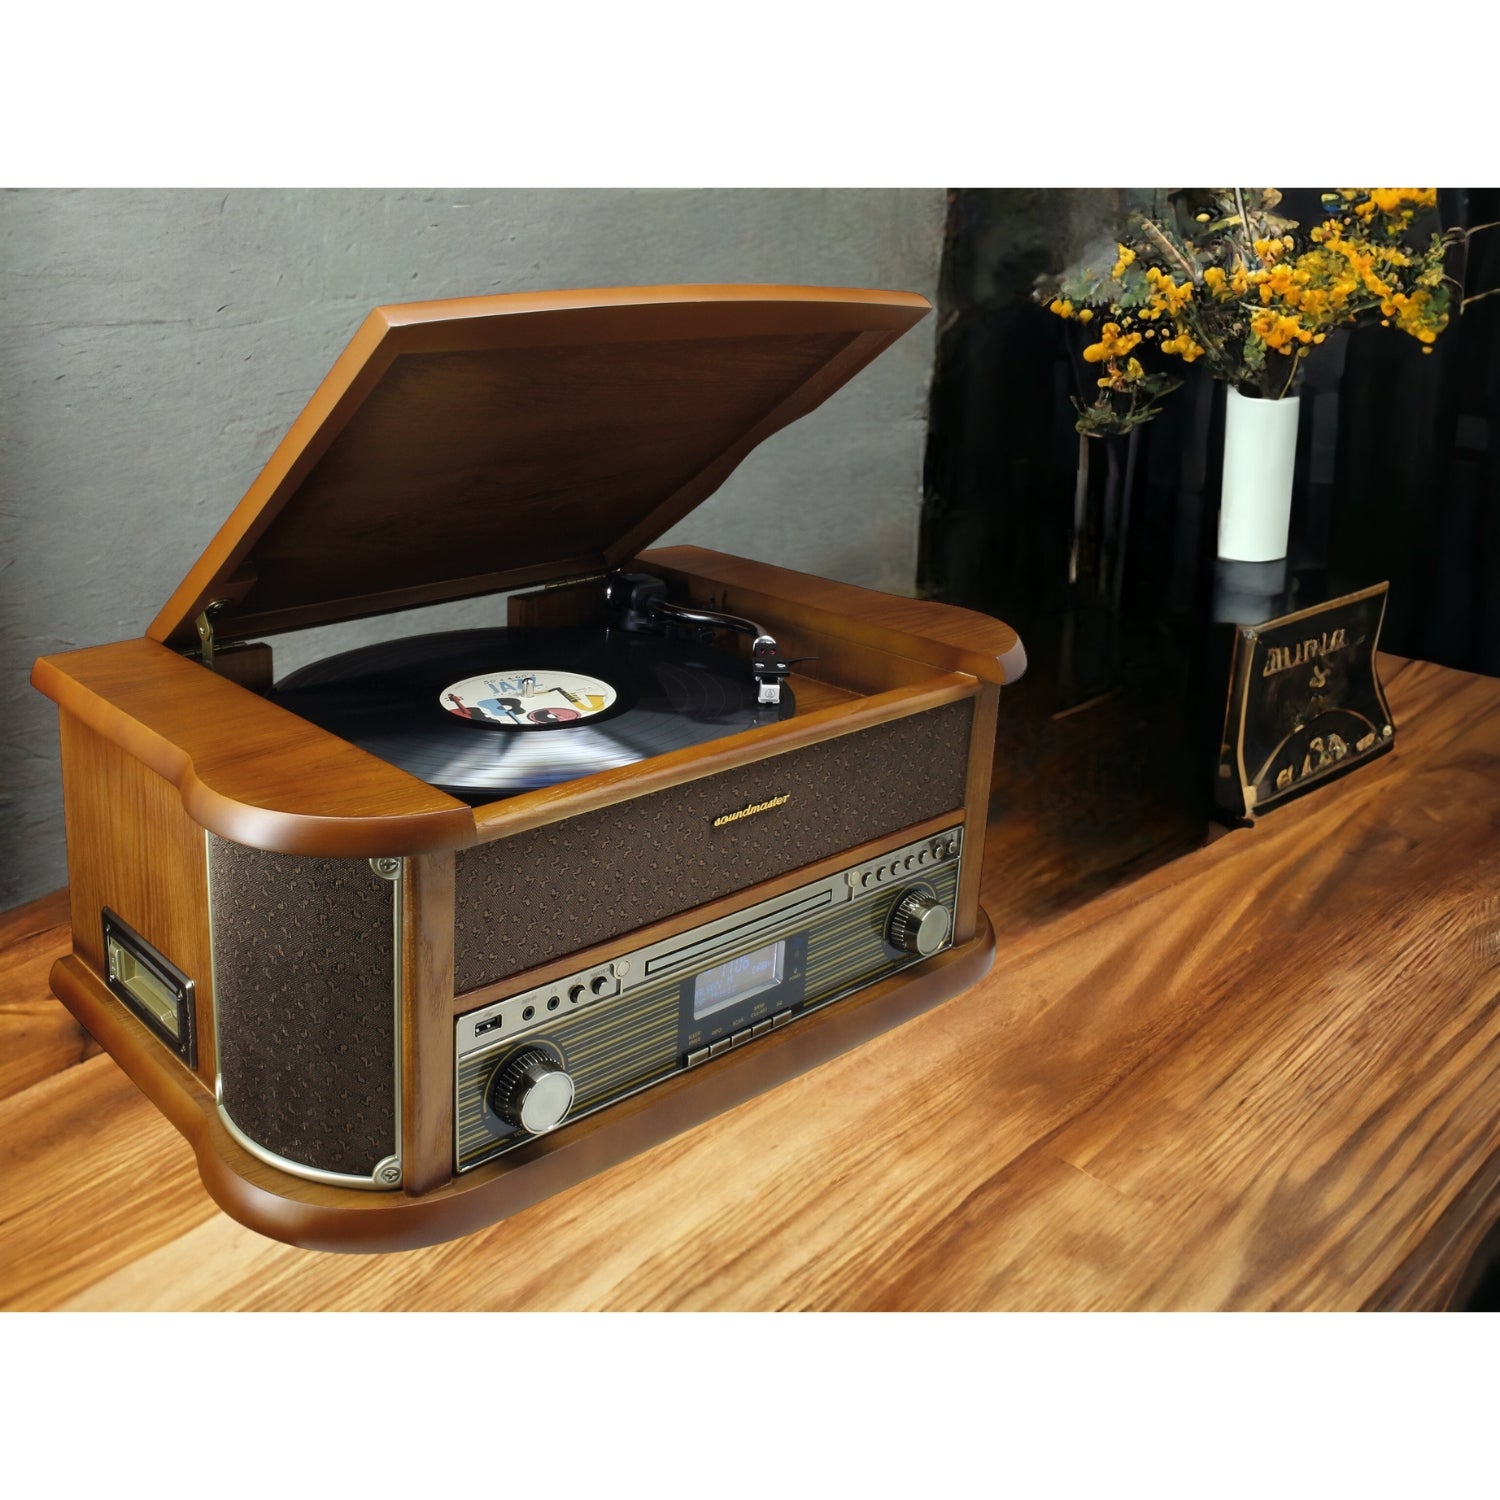 Soundmaster NR566BR 7-in-1 Nostalgie Stereoanlage mit Plattenspieler Audio Technica Magnettonabnehmer | Digitalradio DAB+ | CD-MP3 | USB | Kassette | Bluetooth | Digitalisierungs-Funktion | Equalizer